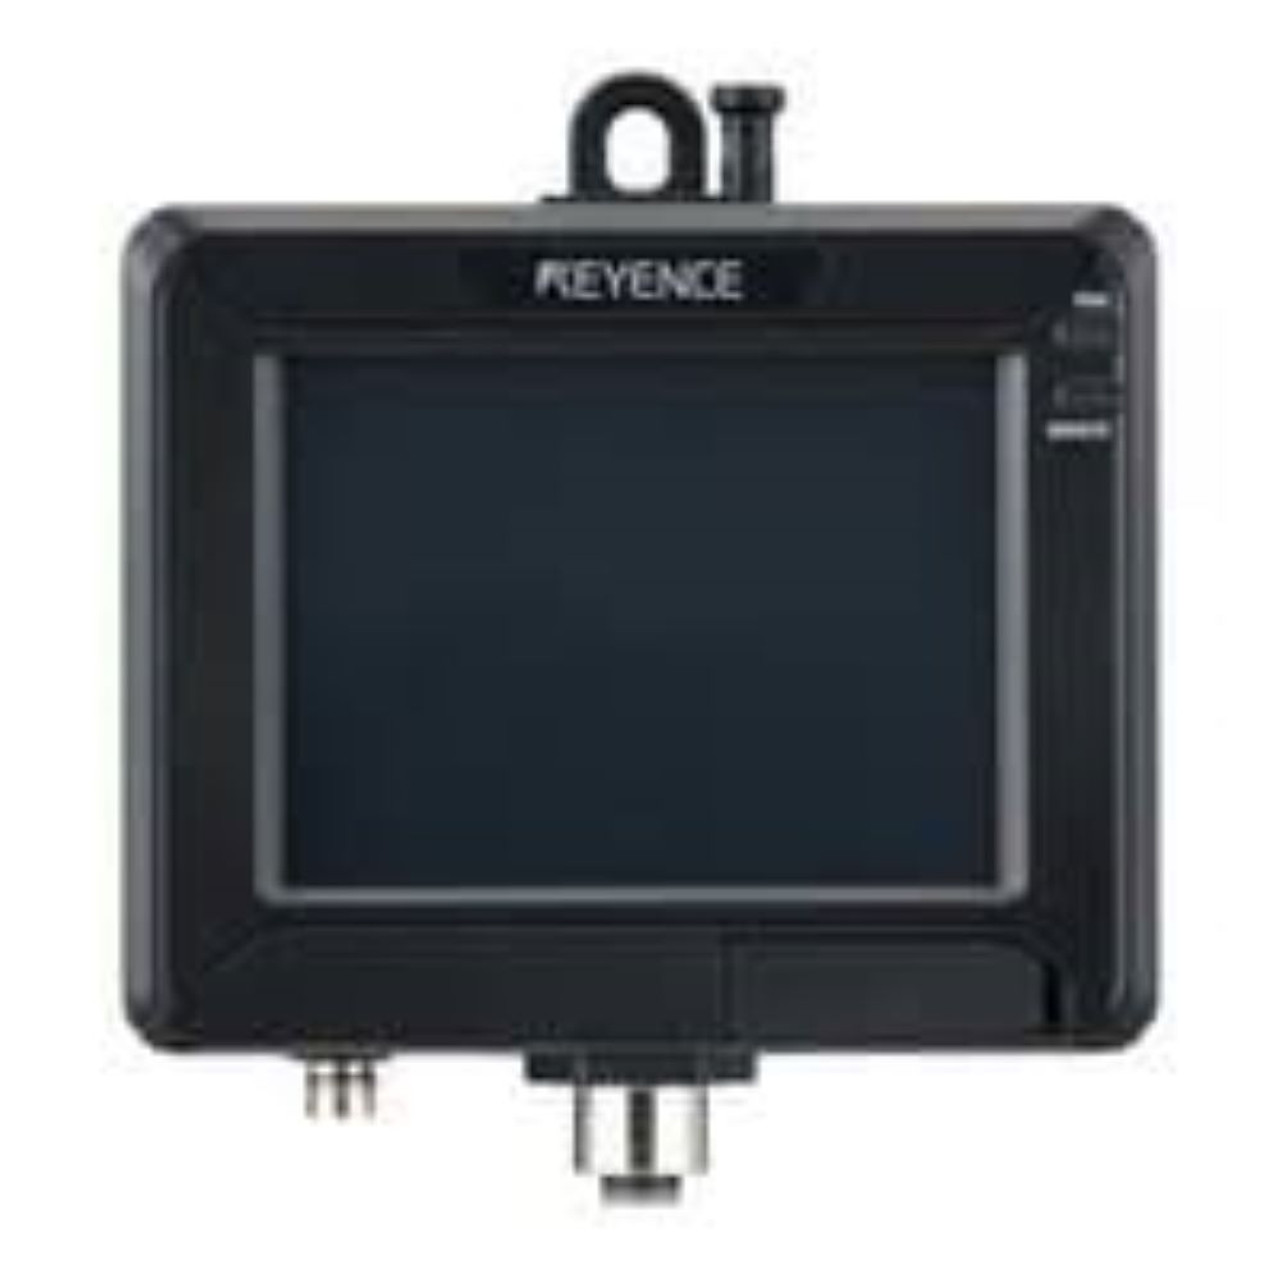 Keyence IV-M30 Vision Sensor, Intelligent Monitor [New]